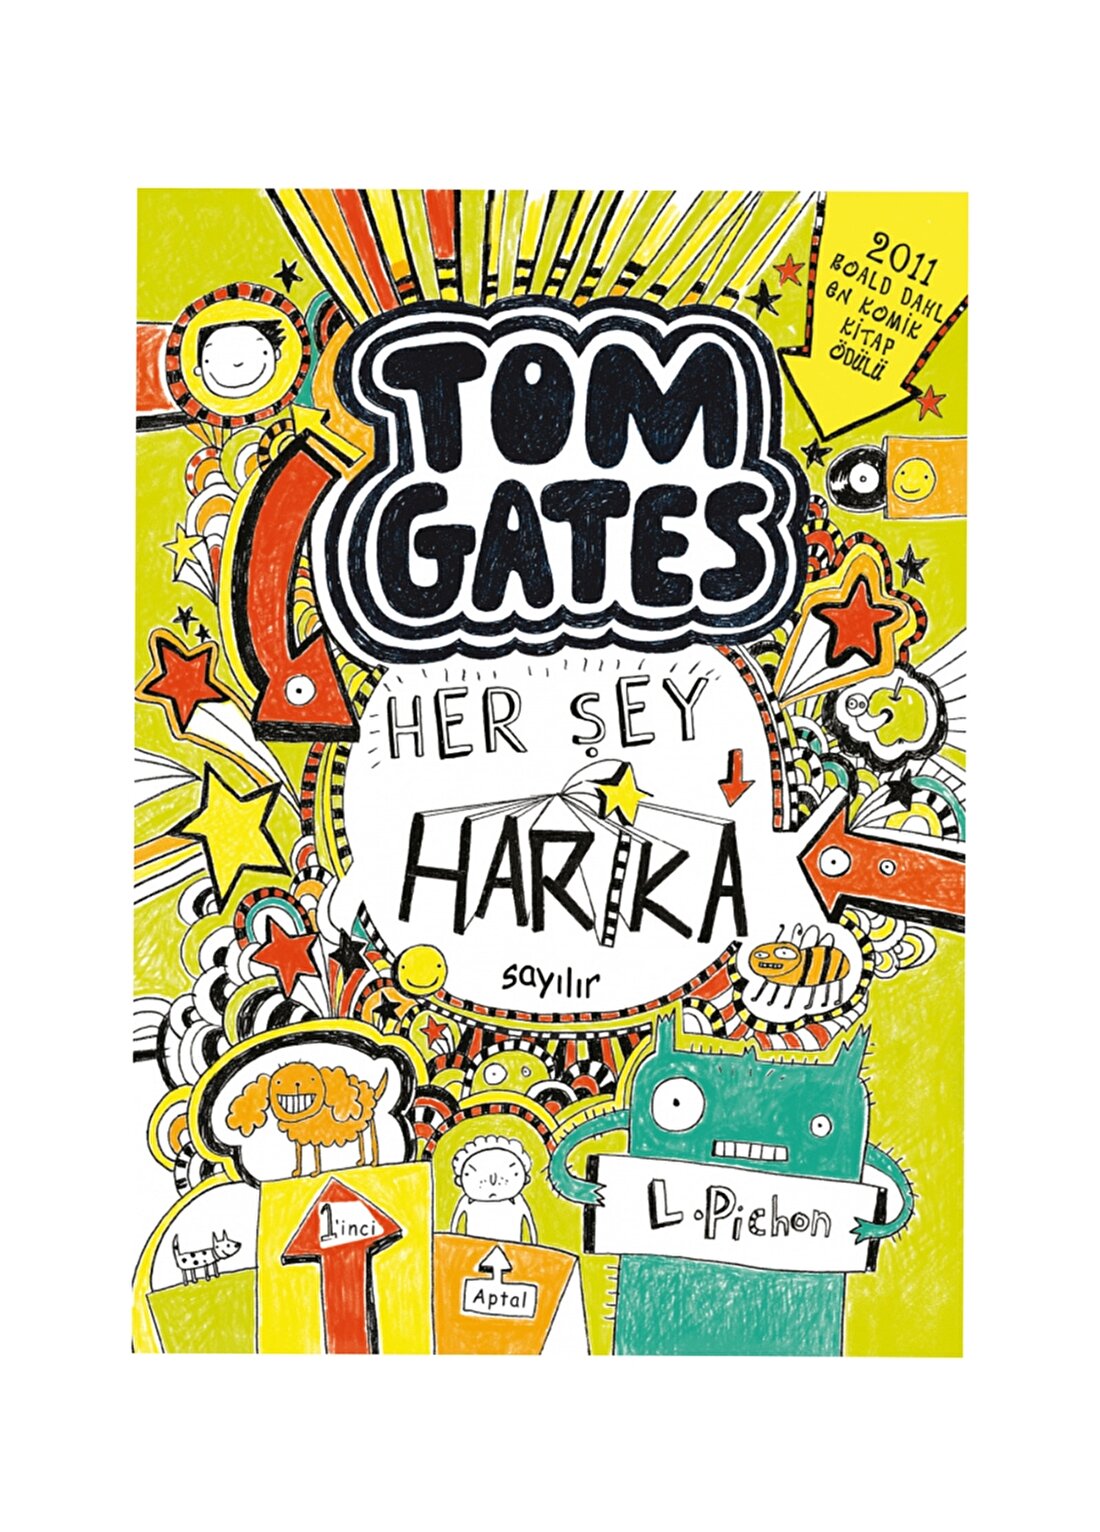 Tom Gates 2- Her Şey Harika Sayılır (Sk)